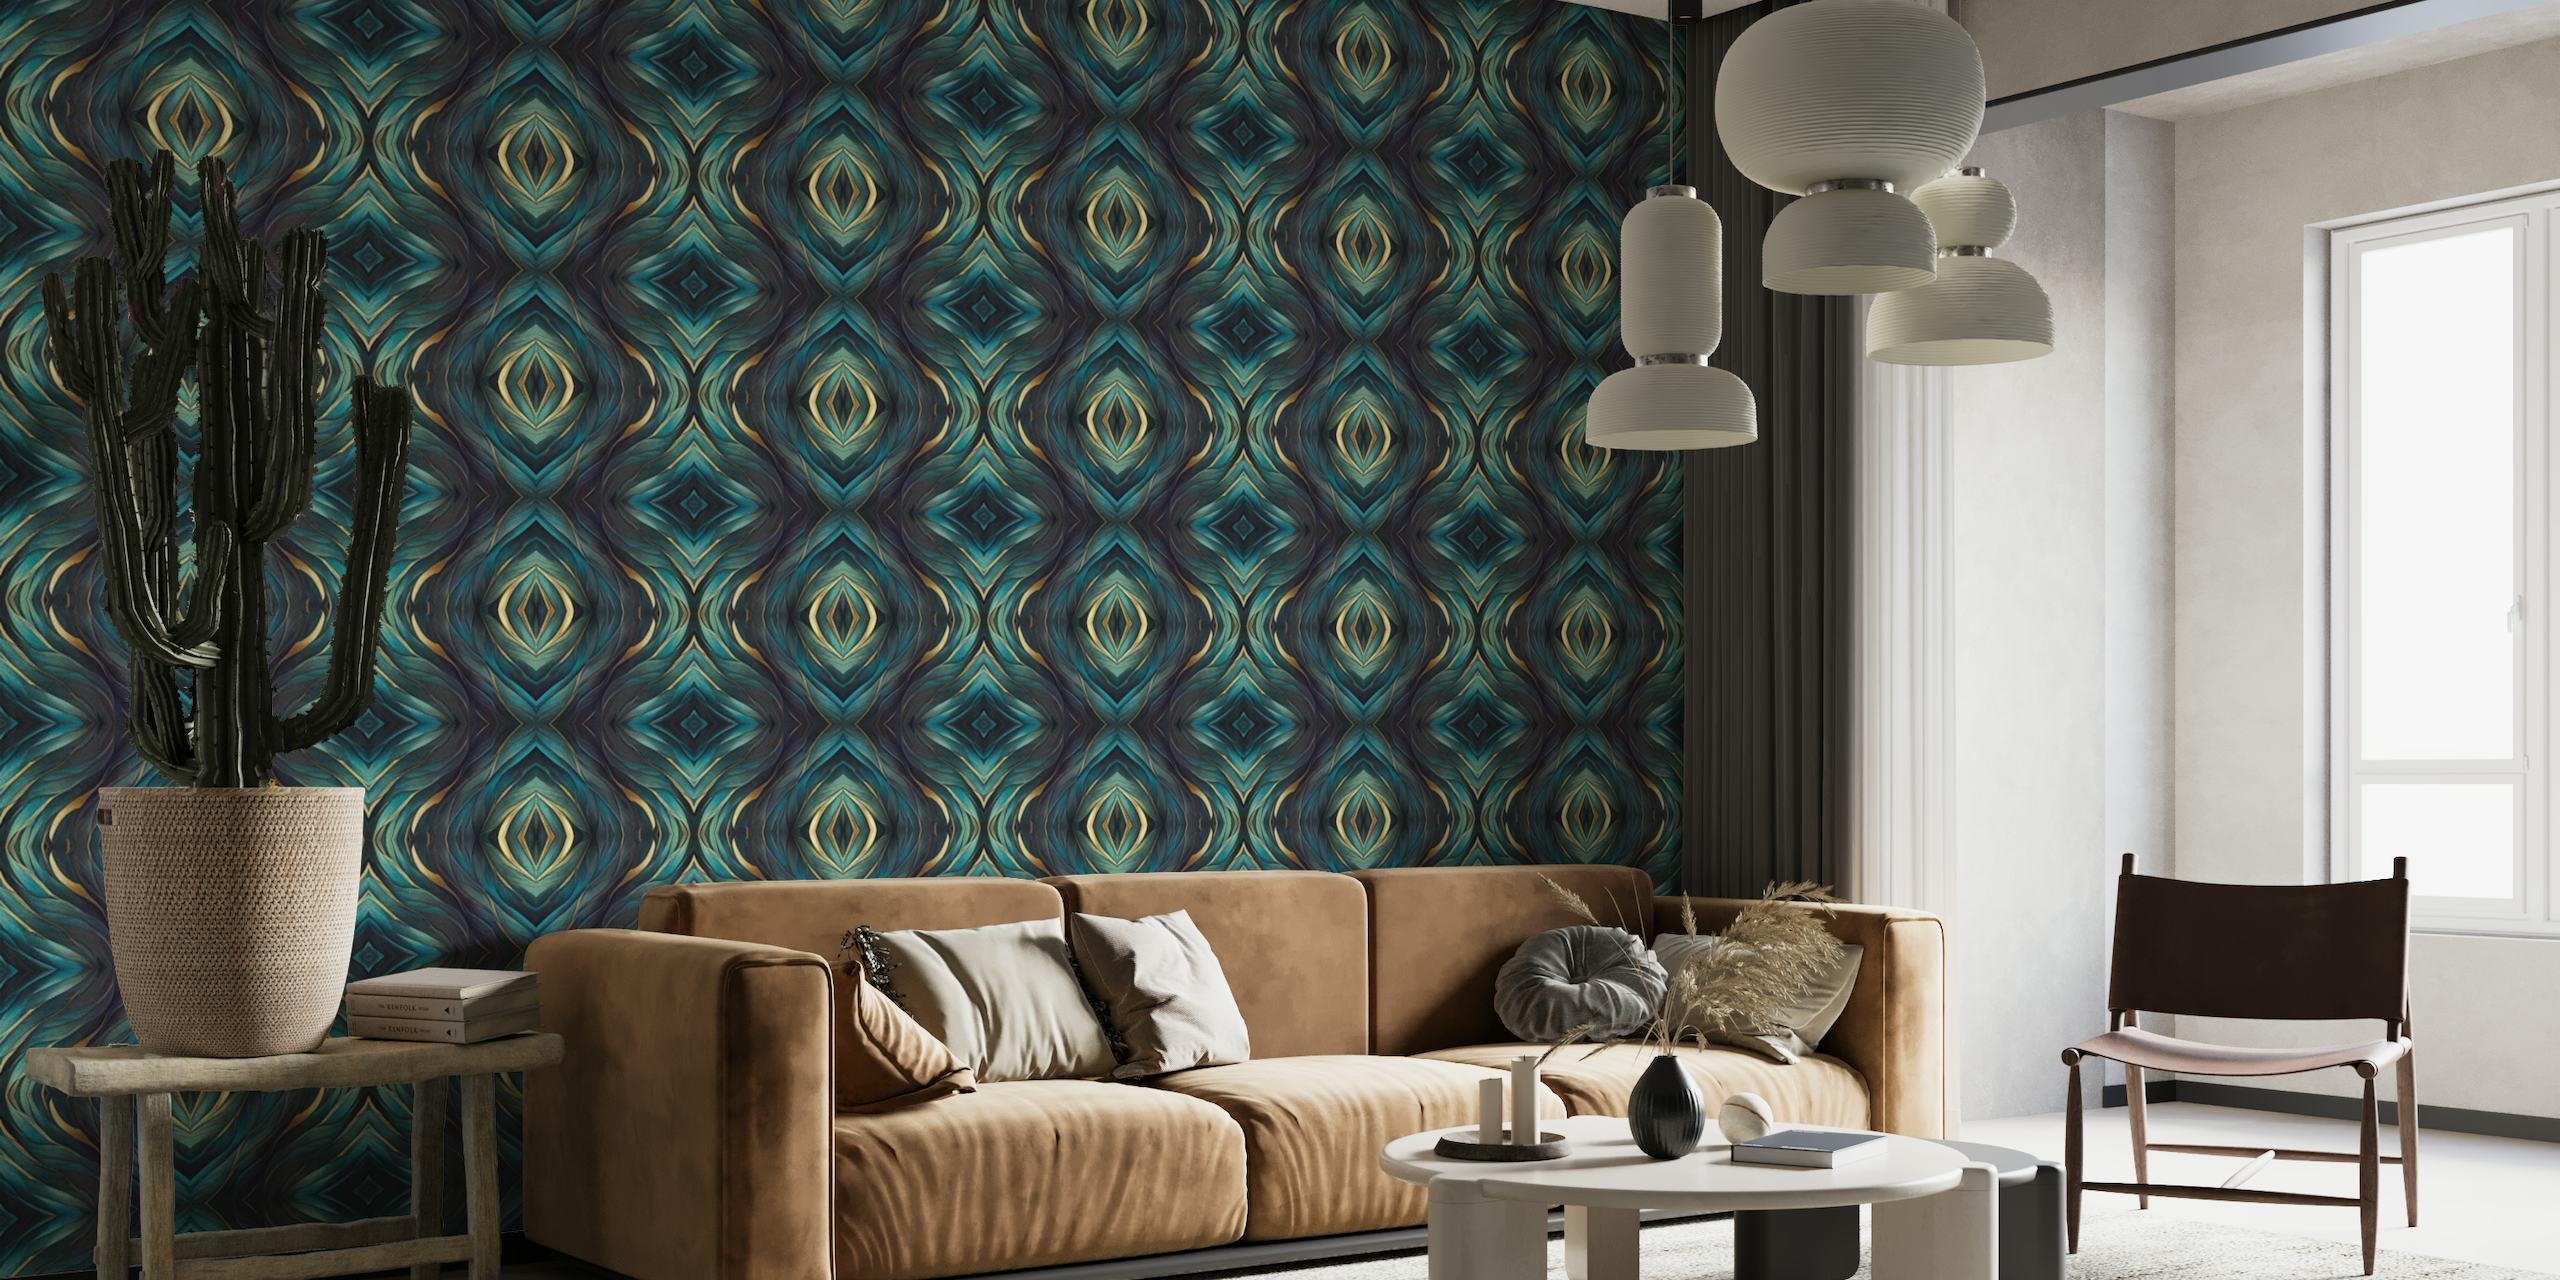 Artisanal Mediterranean Tile Design Teal Blue Gold tapete